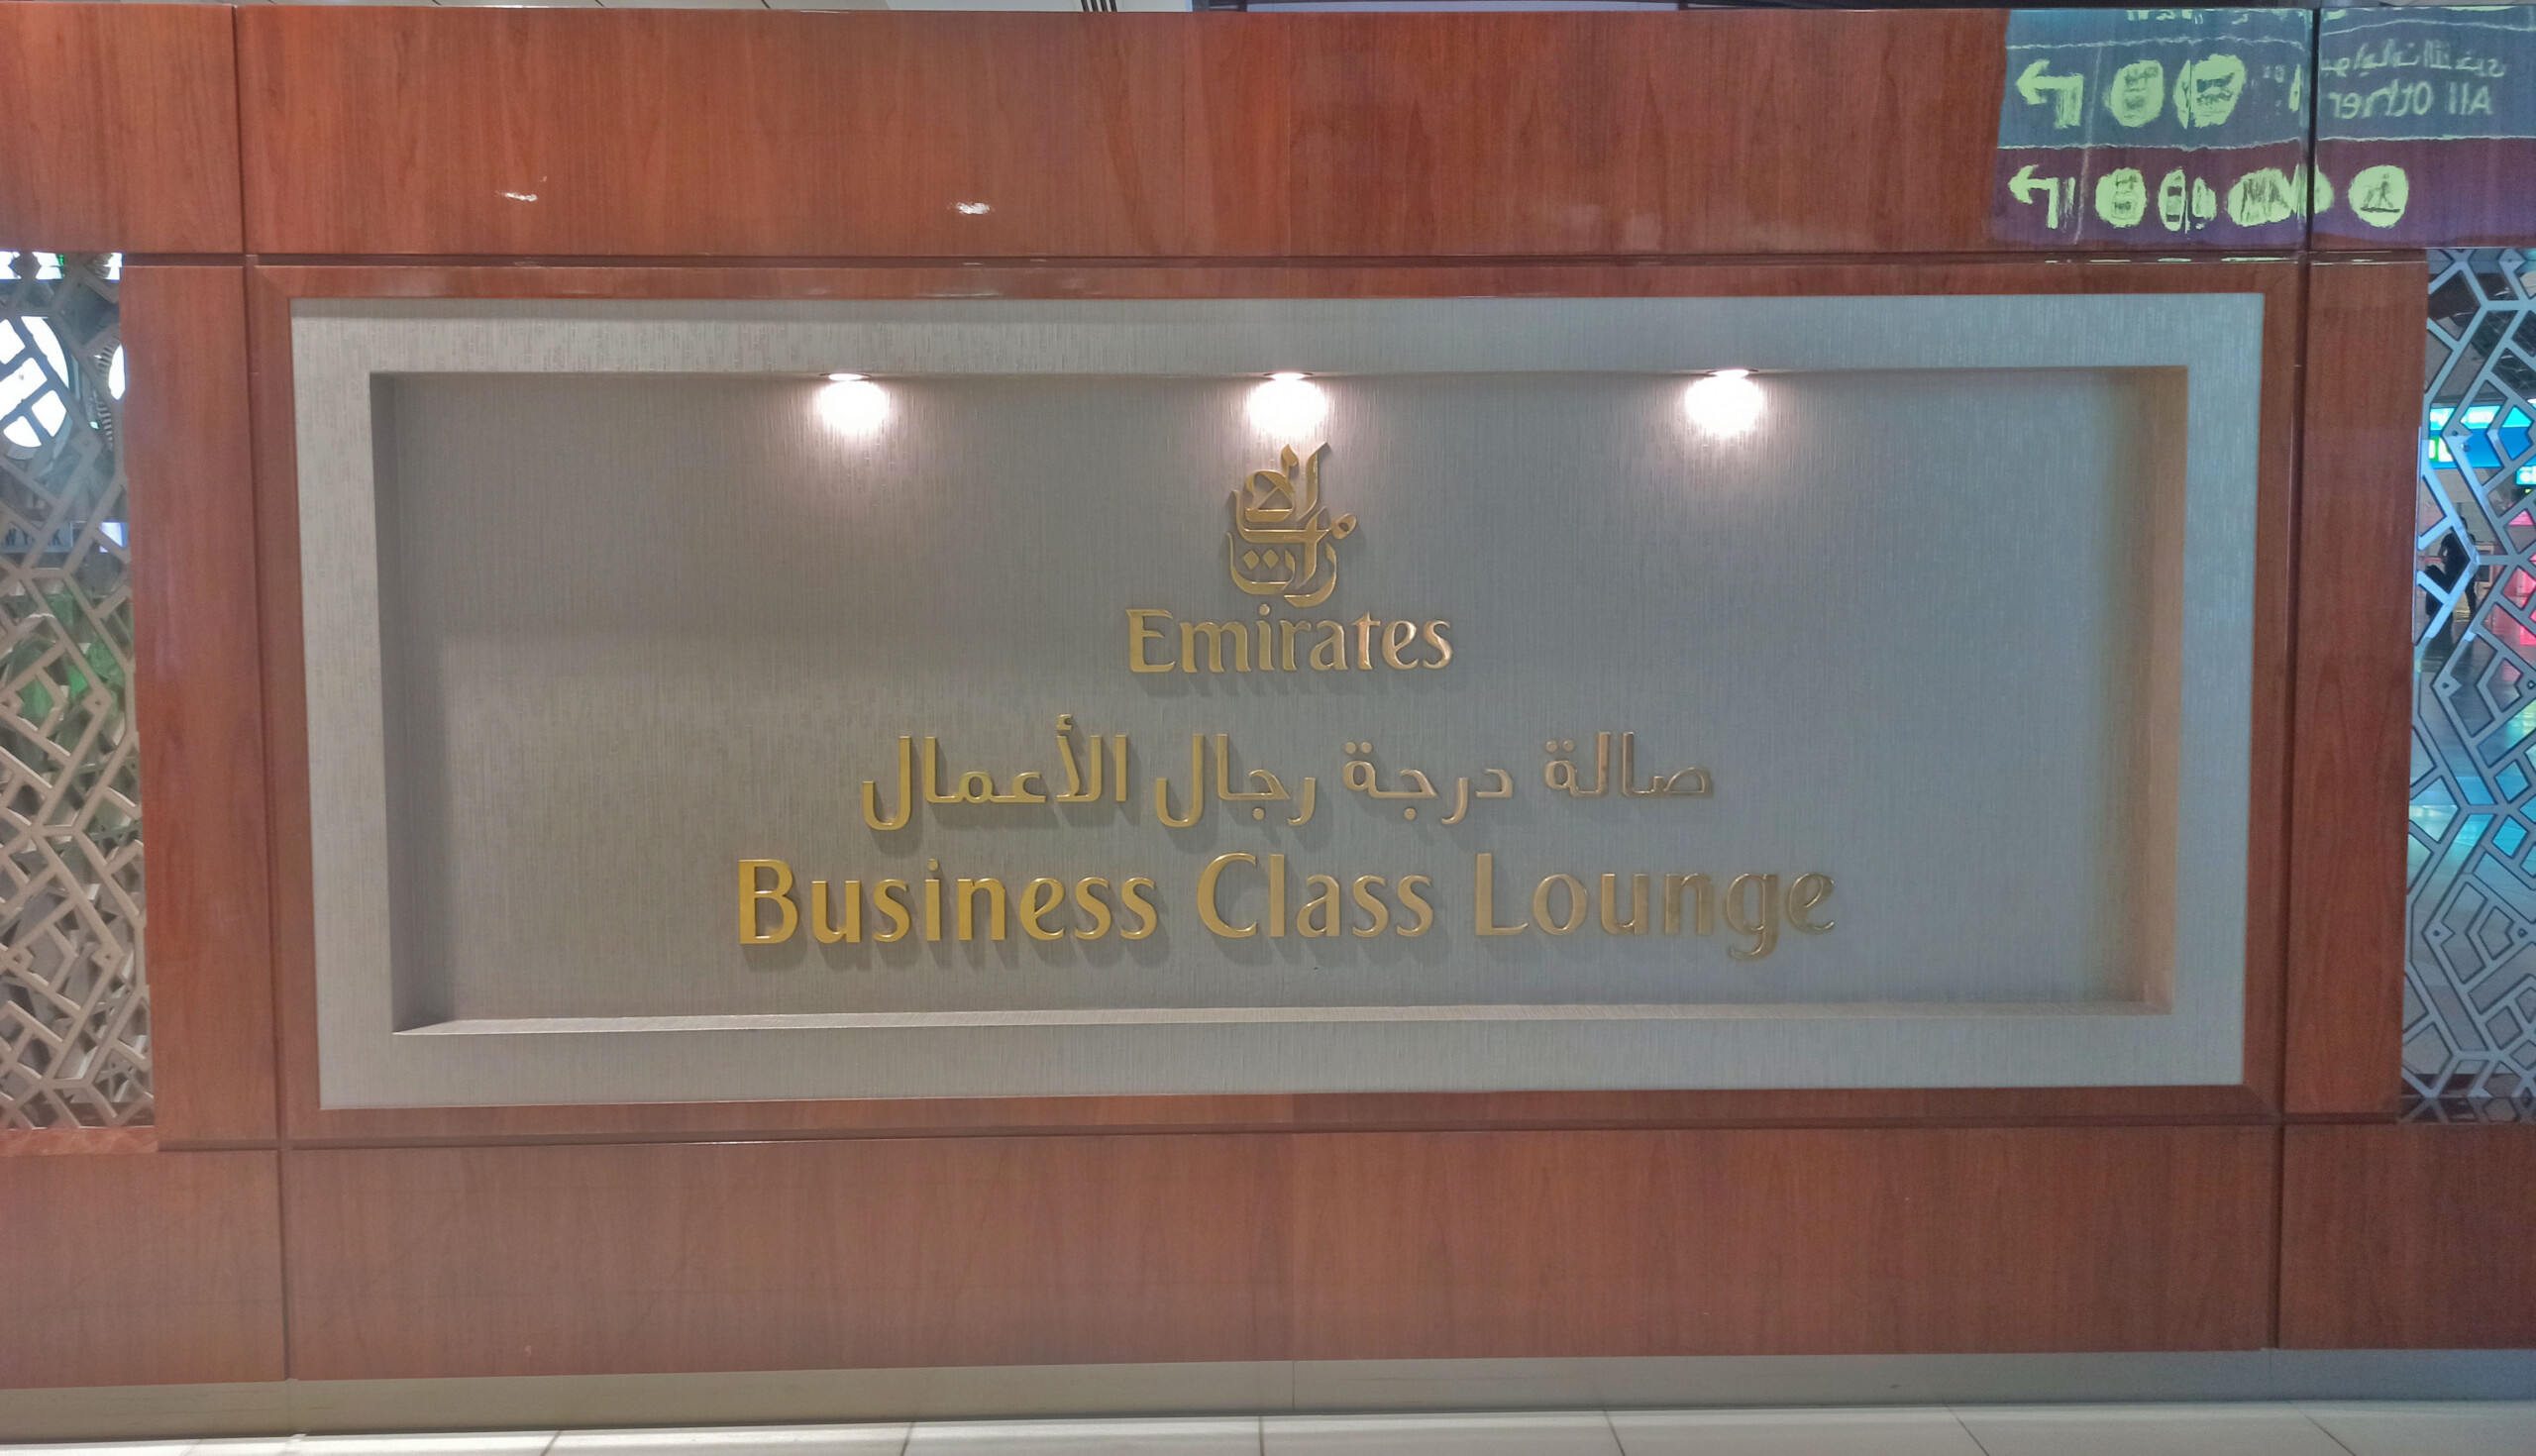 Business Lounge Entrance Sign